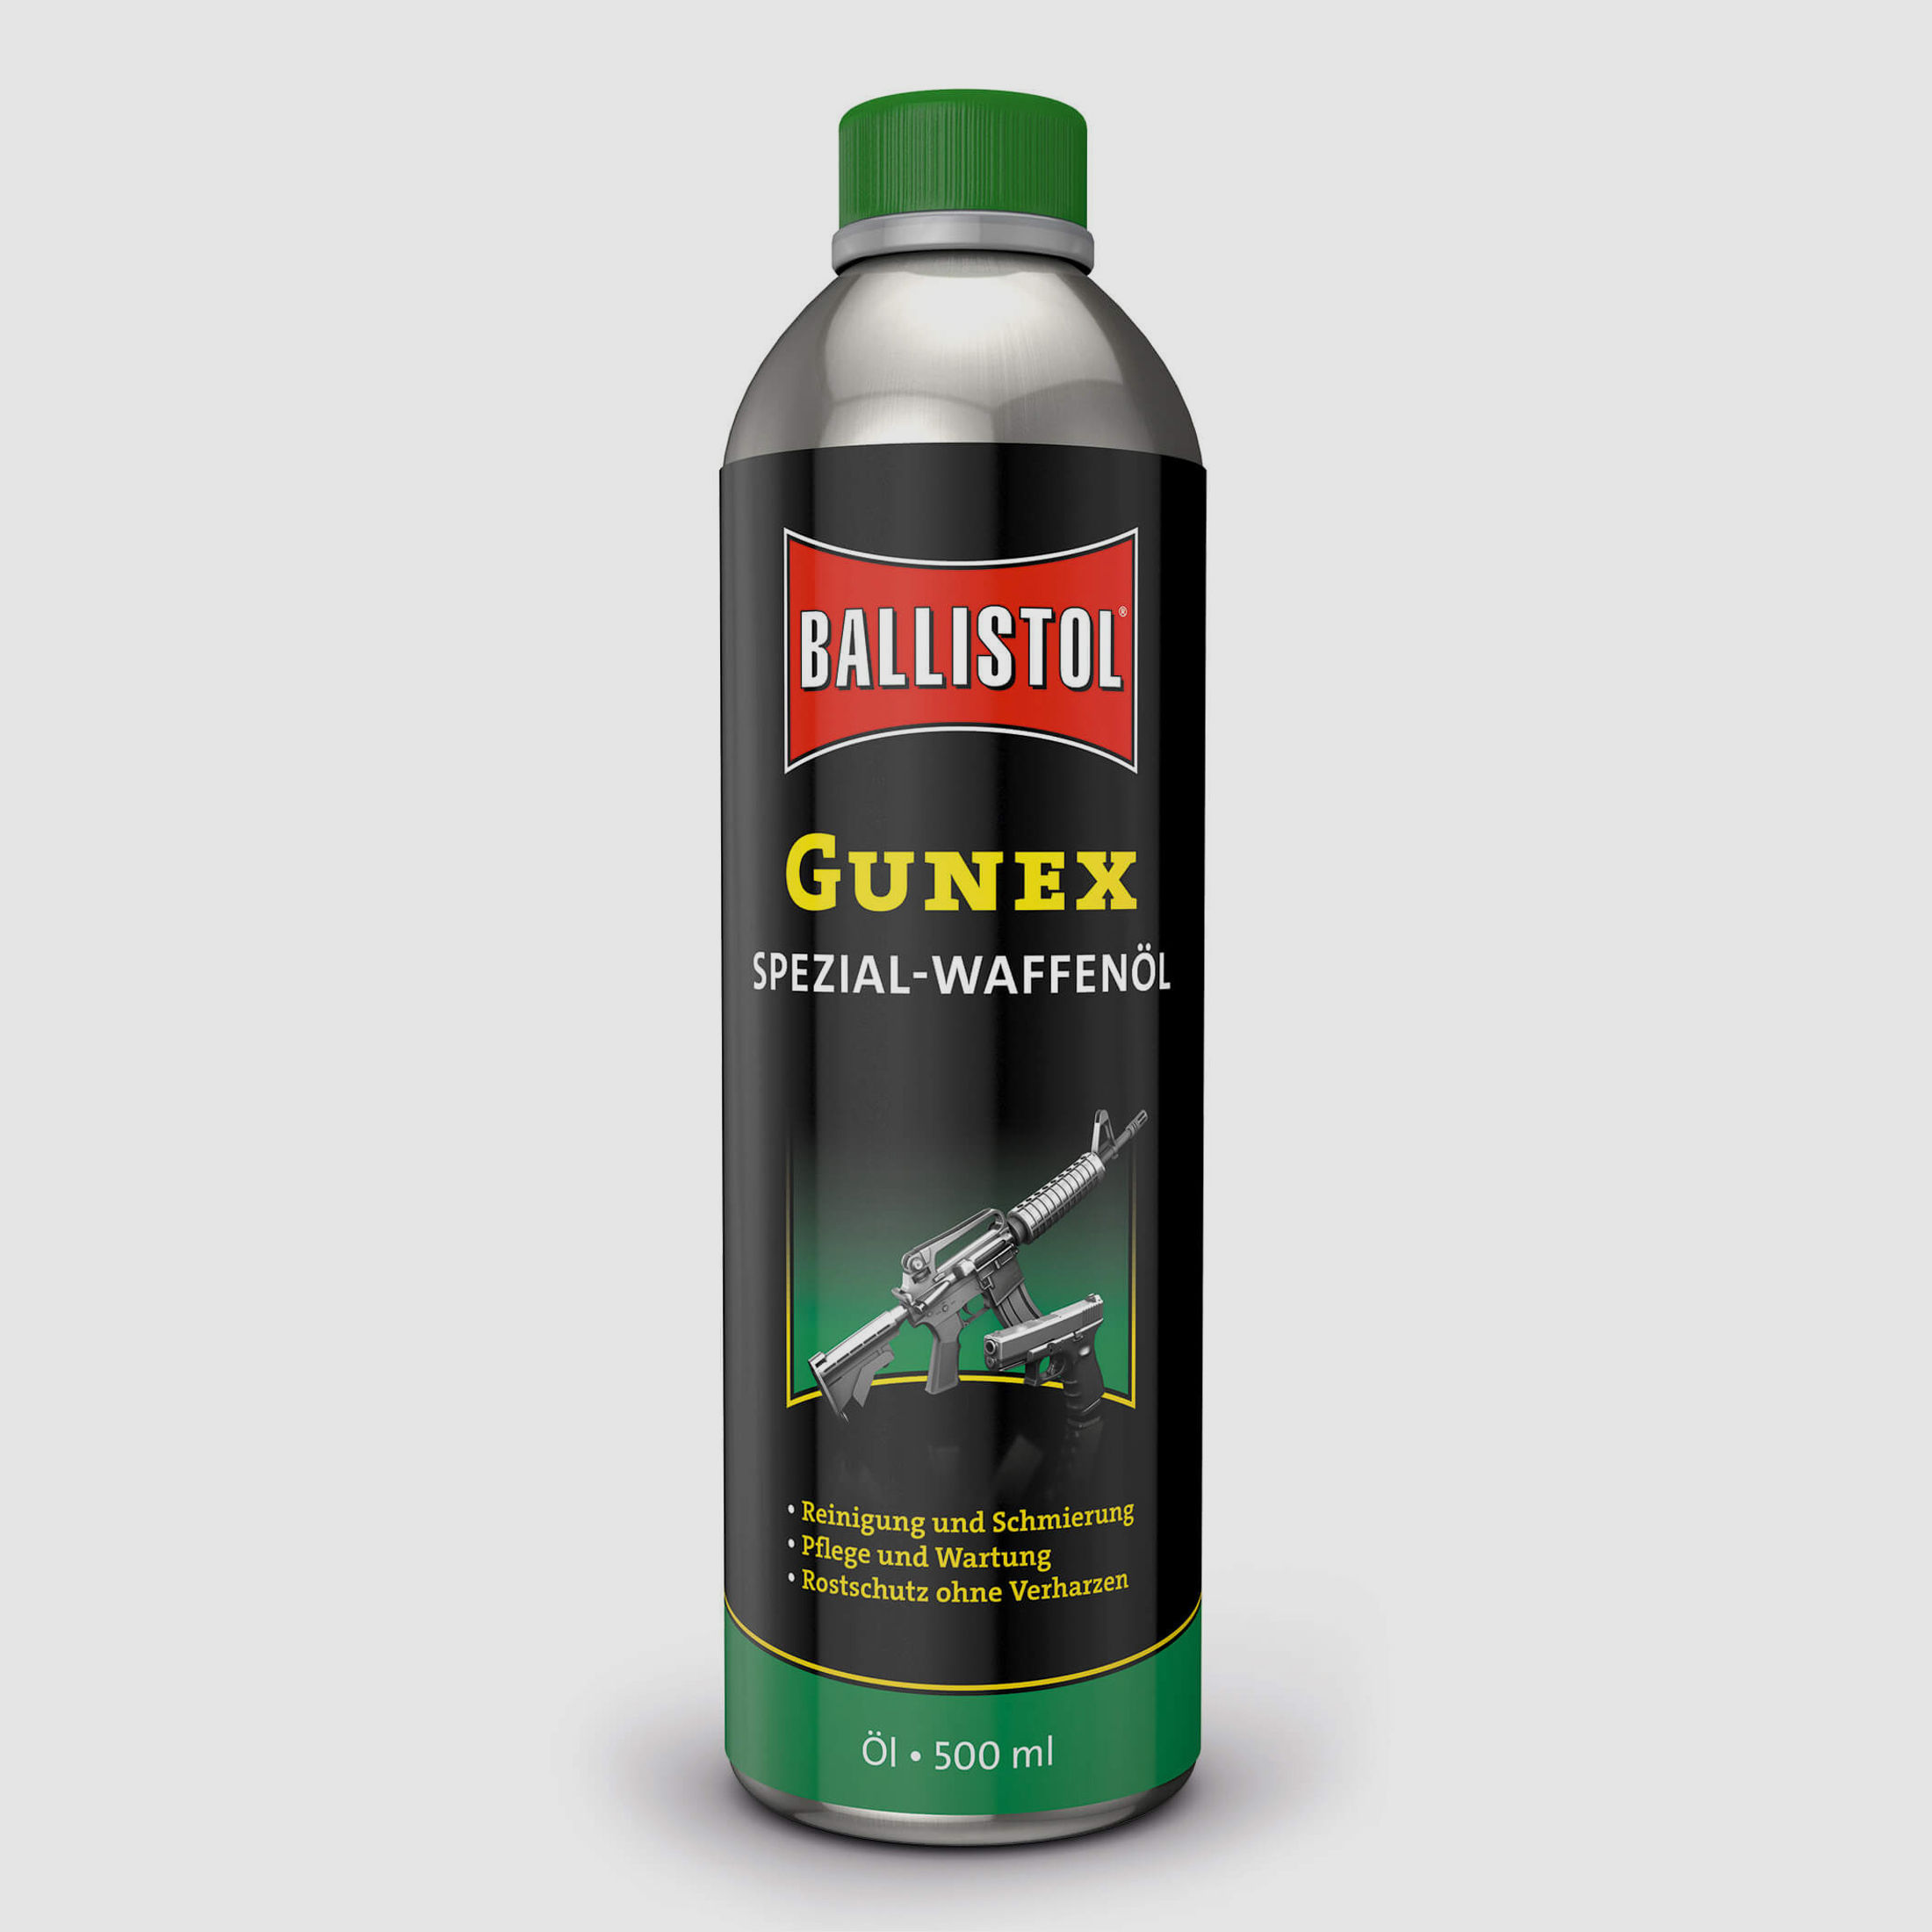 Ballistol Gunex Spezial-Waffenöl - 500ml Flasch